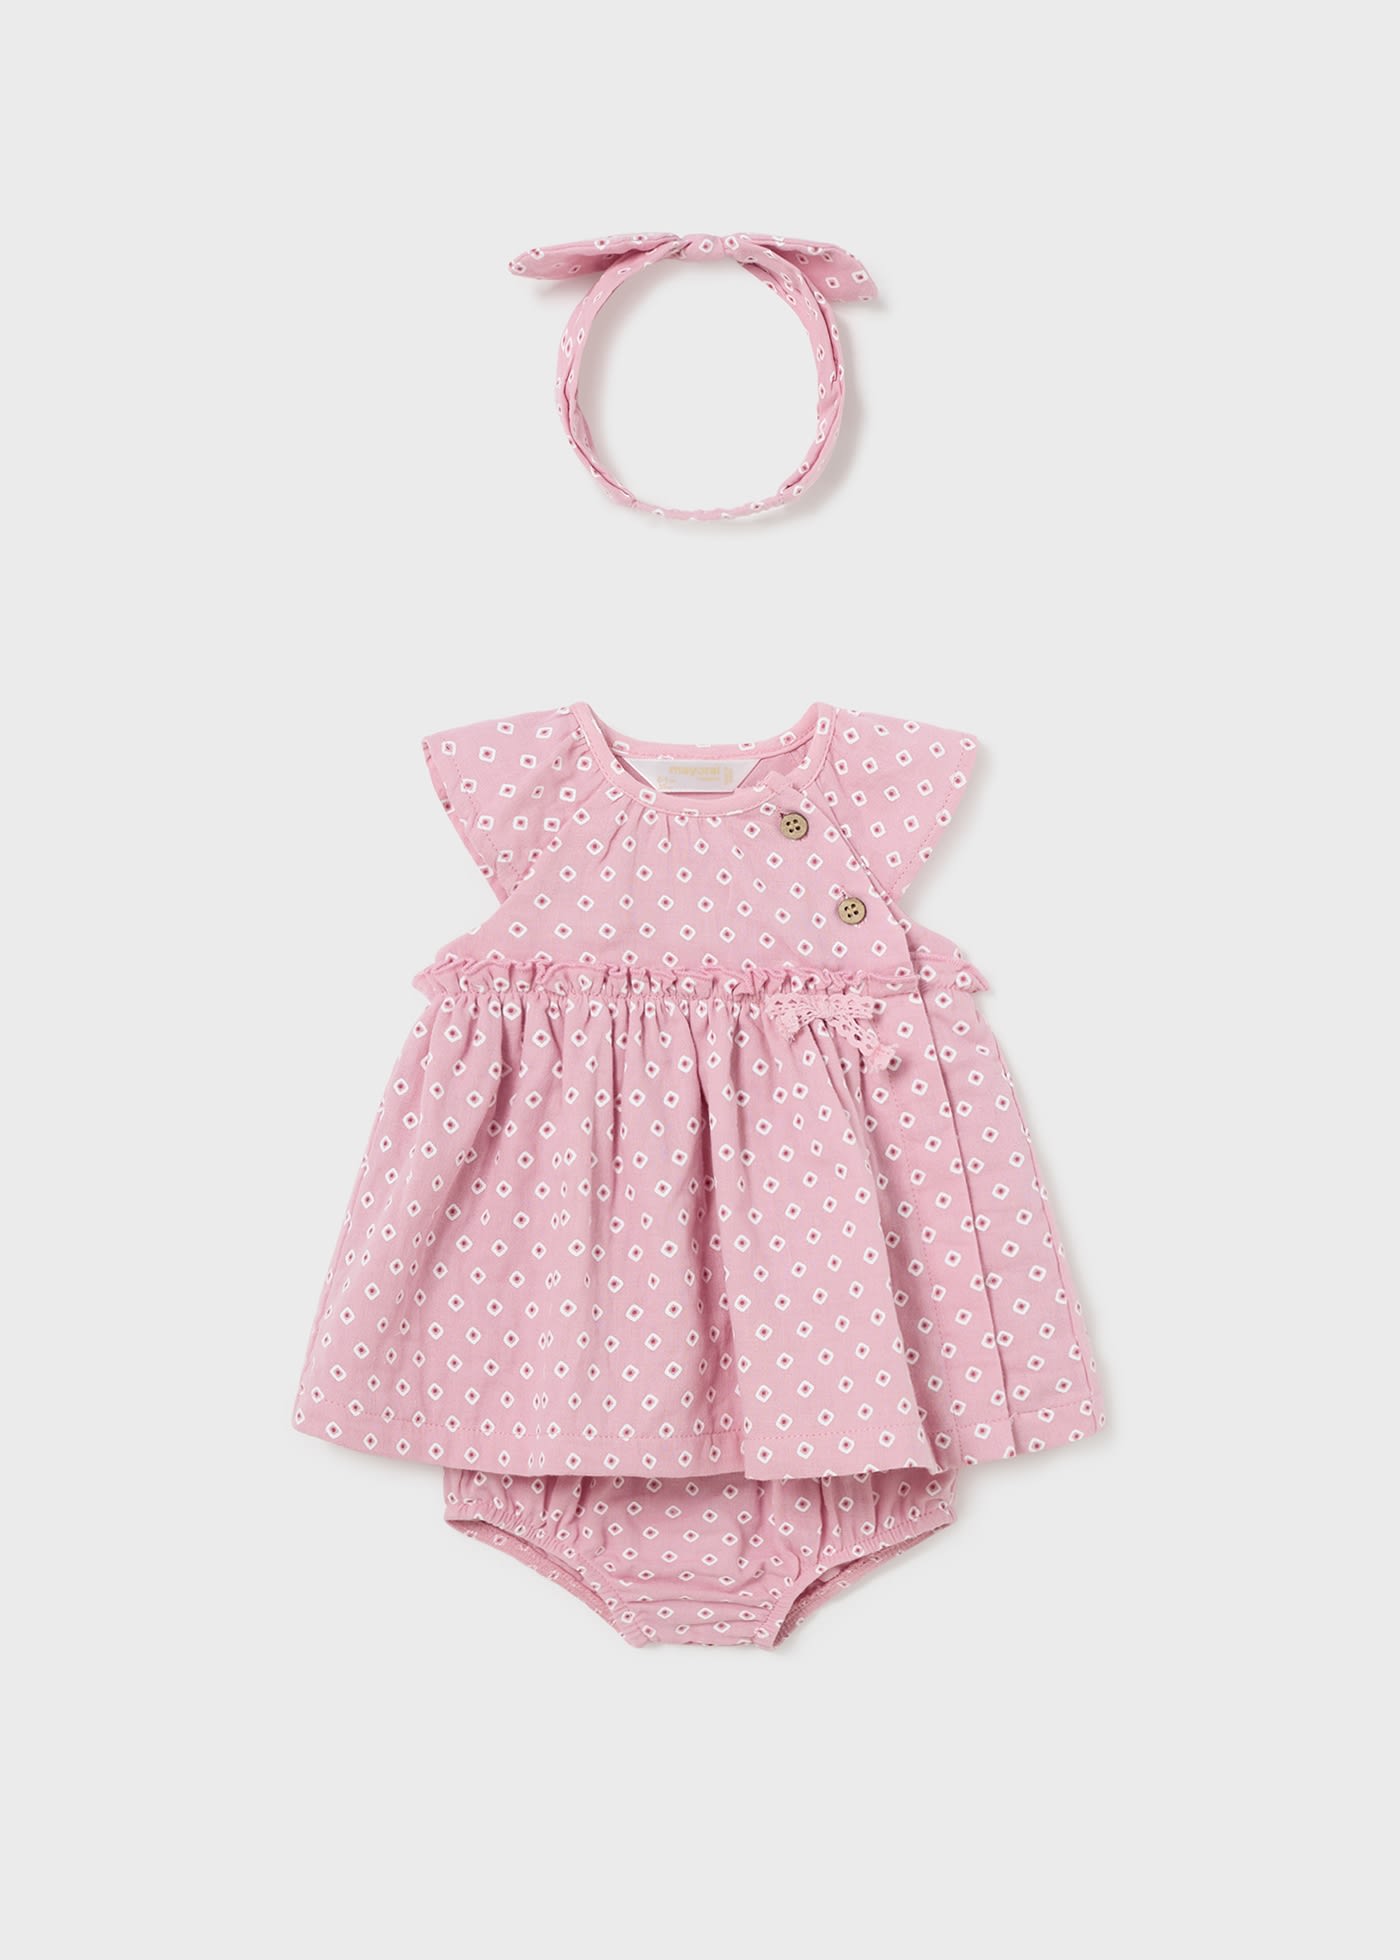 Shop Baby Girl Dresses | Short & Long Sleeve Styles in Charming Prints –  Gerber Childrenswear